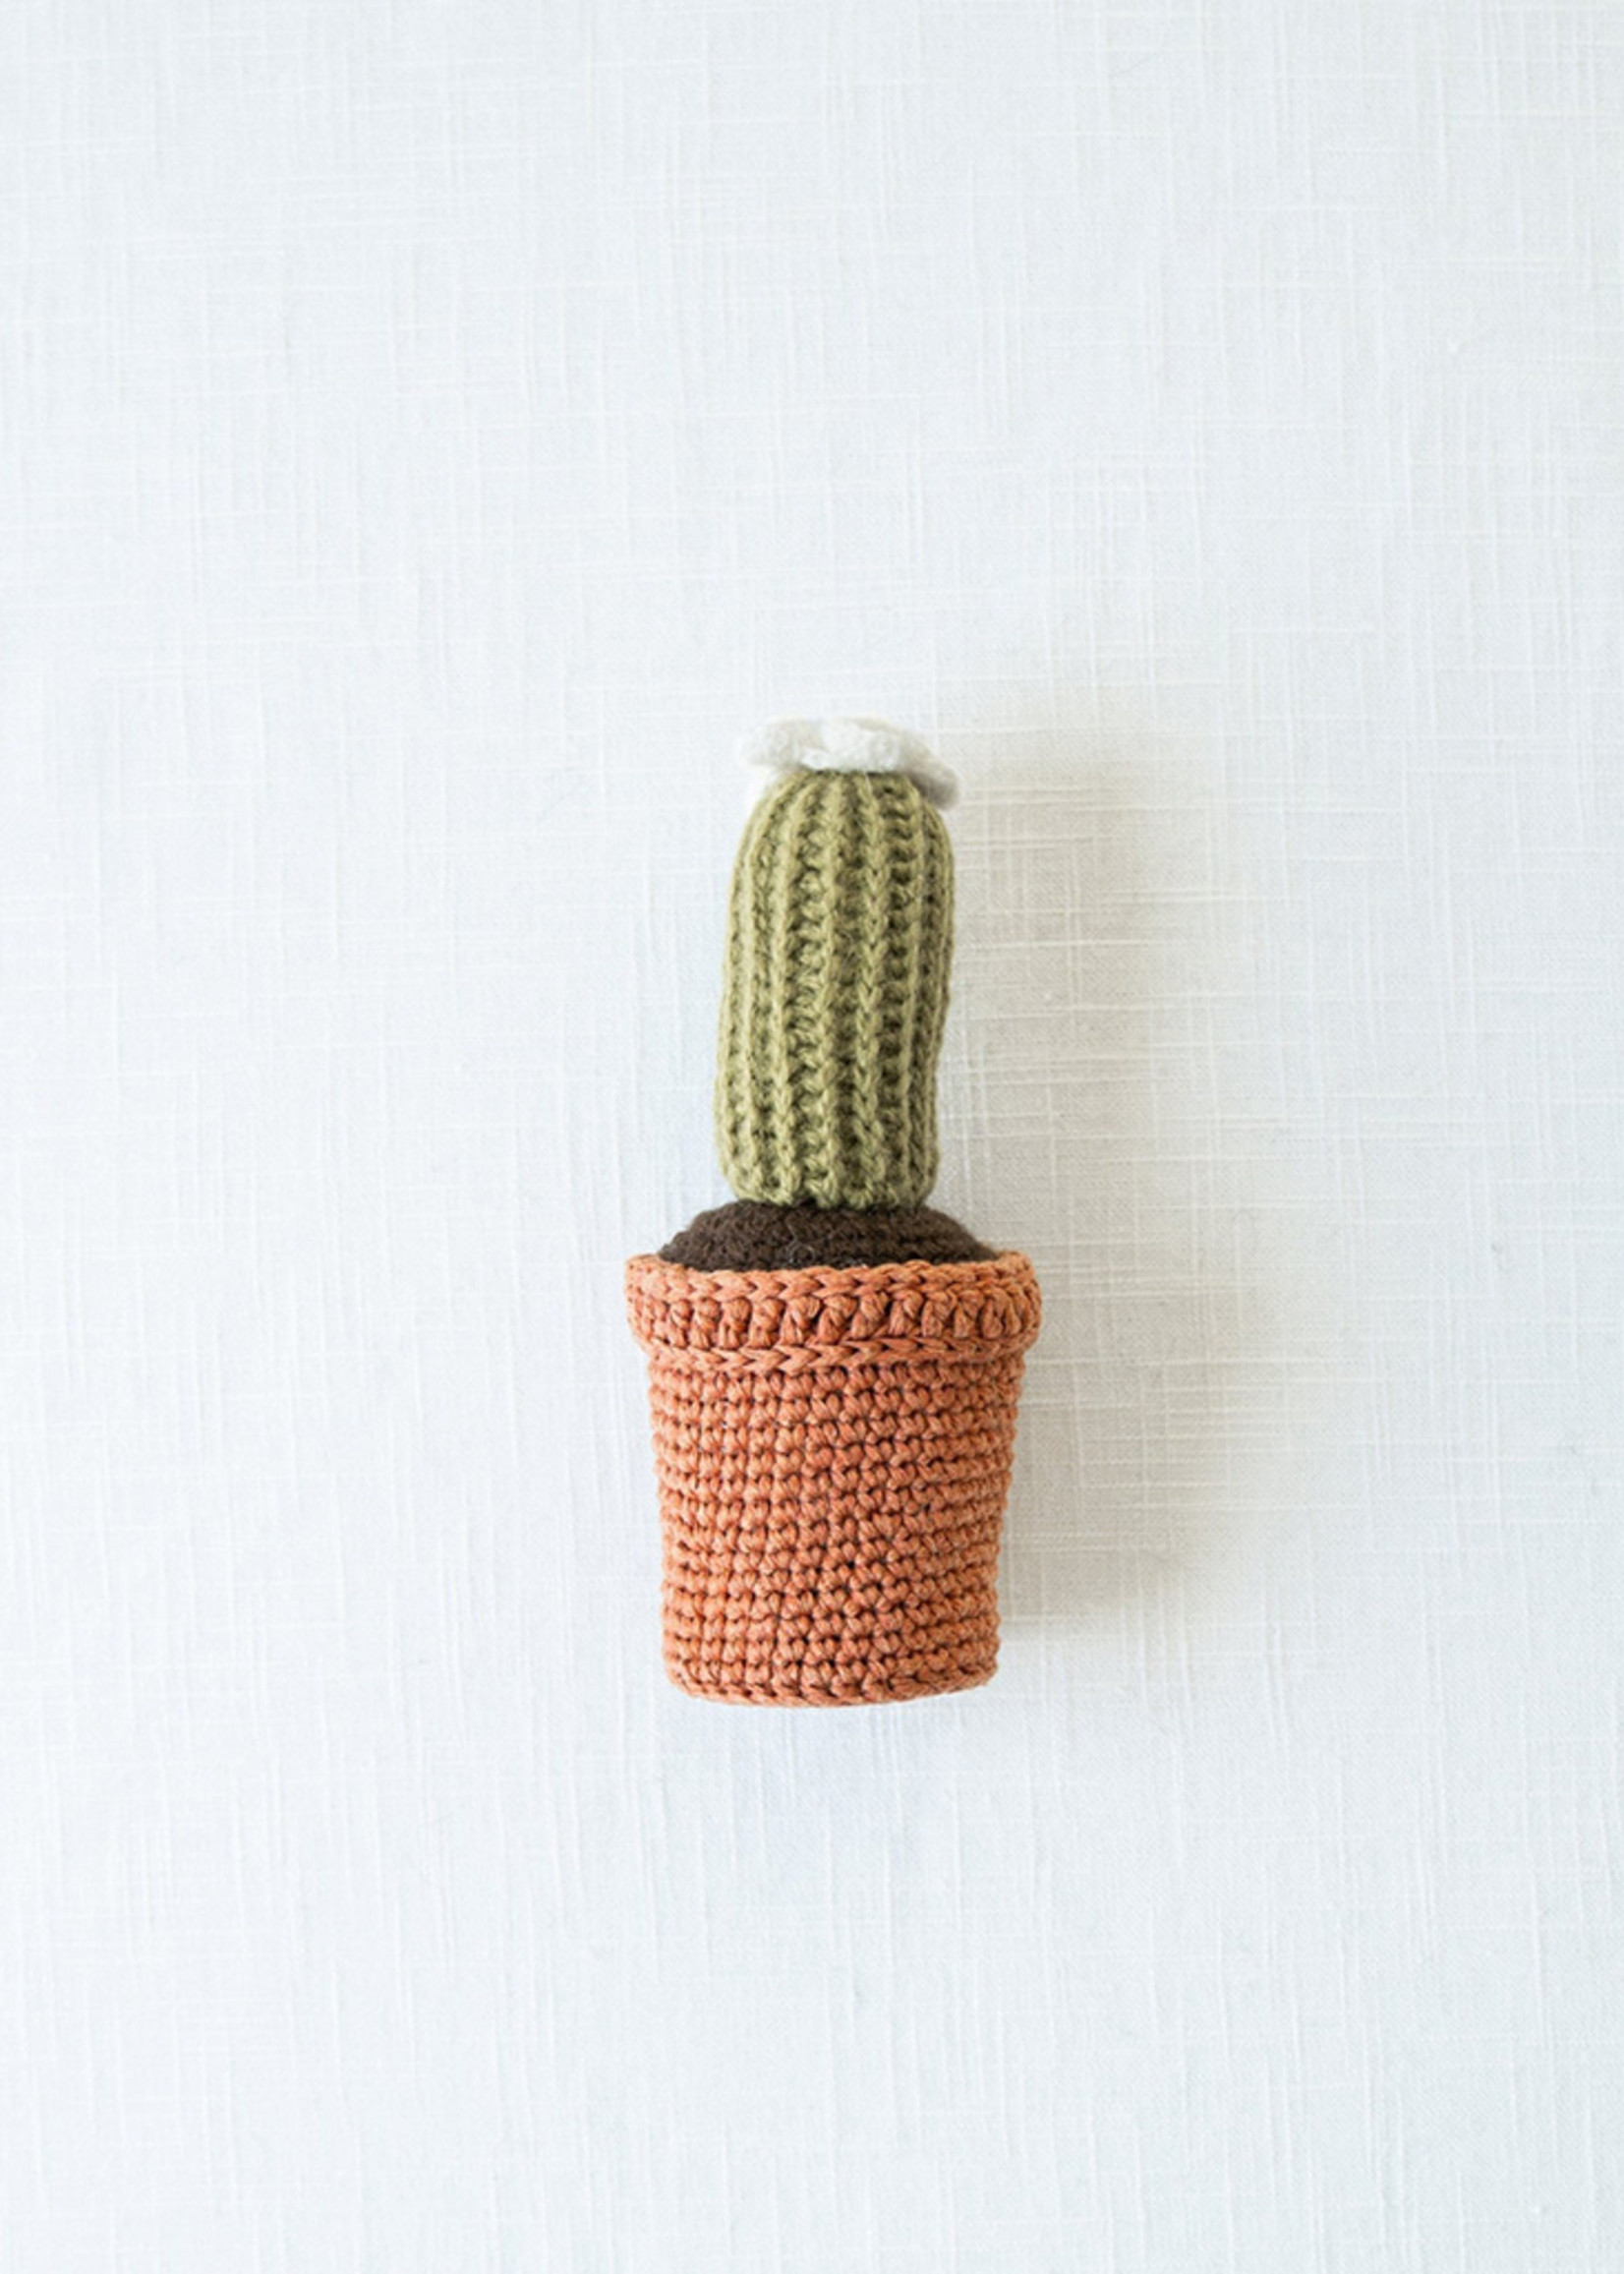 Knit Cactus Plant & White Flower